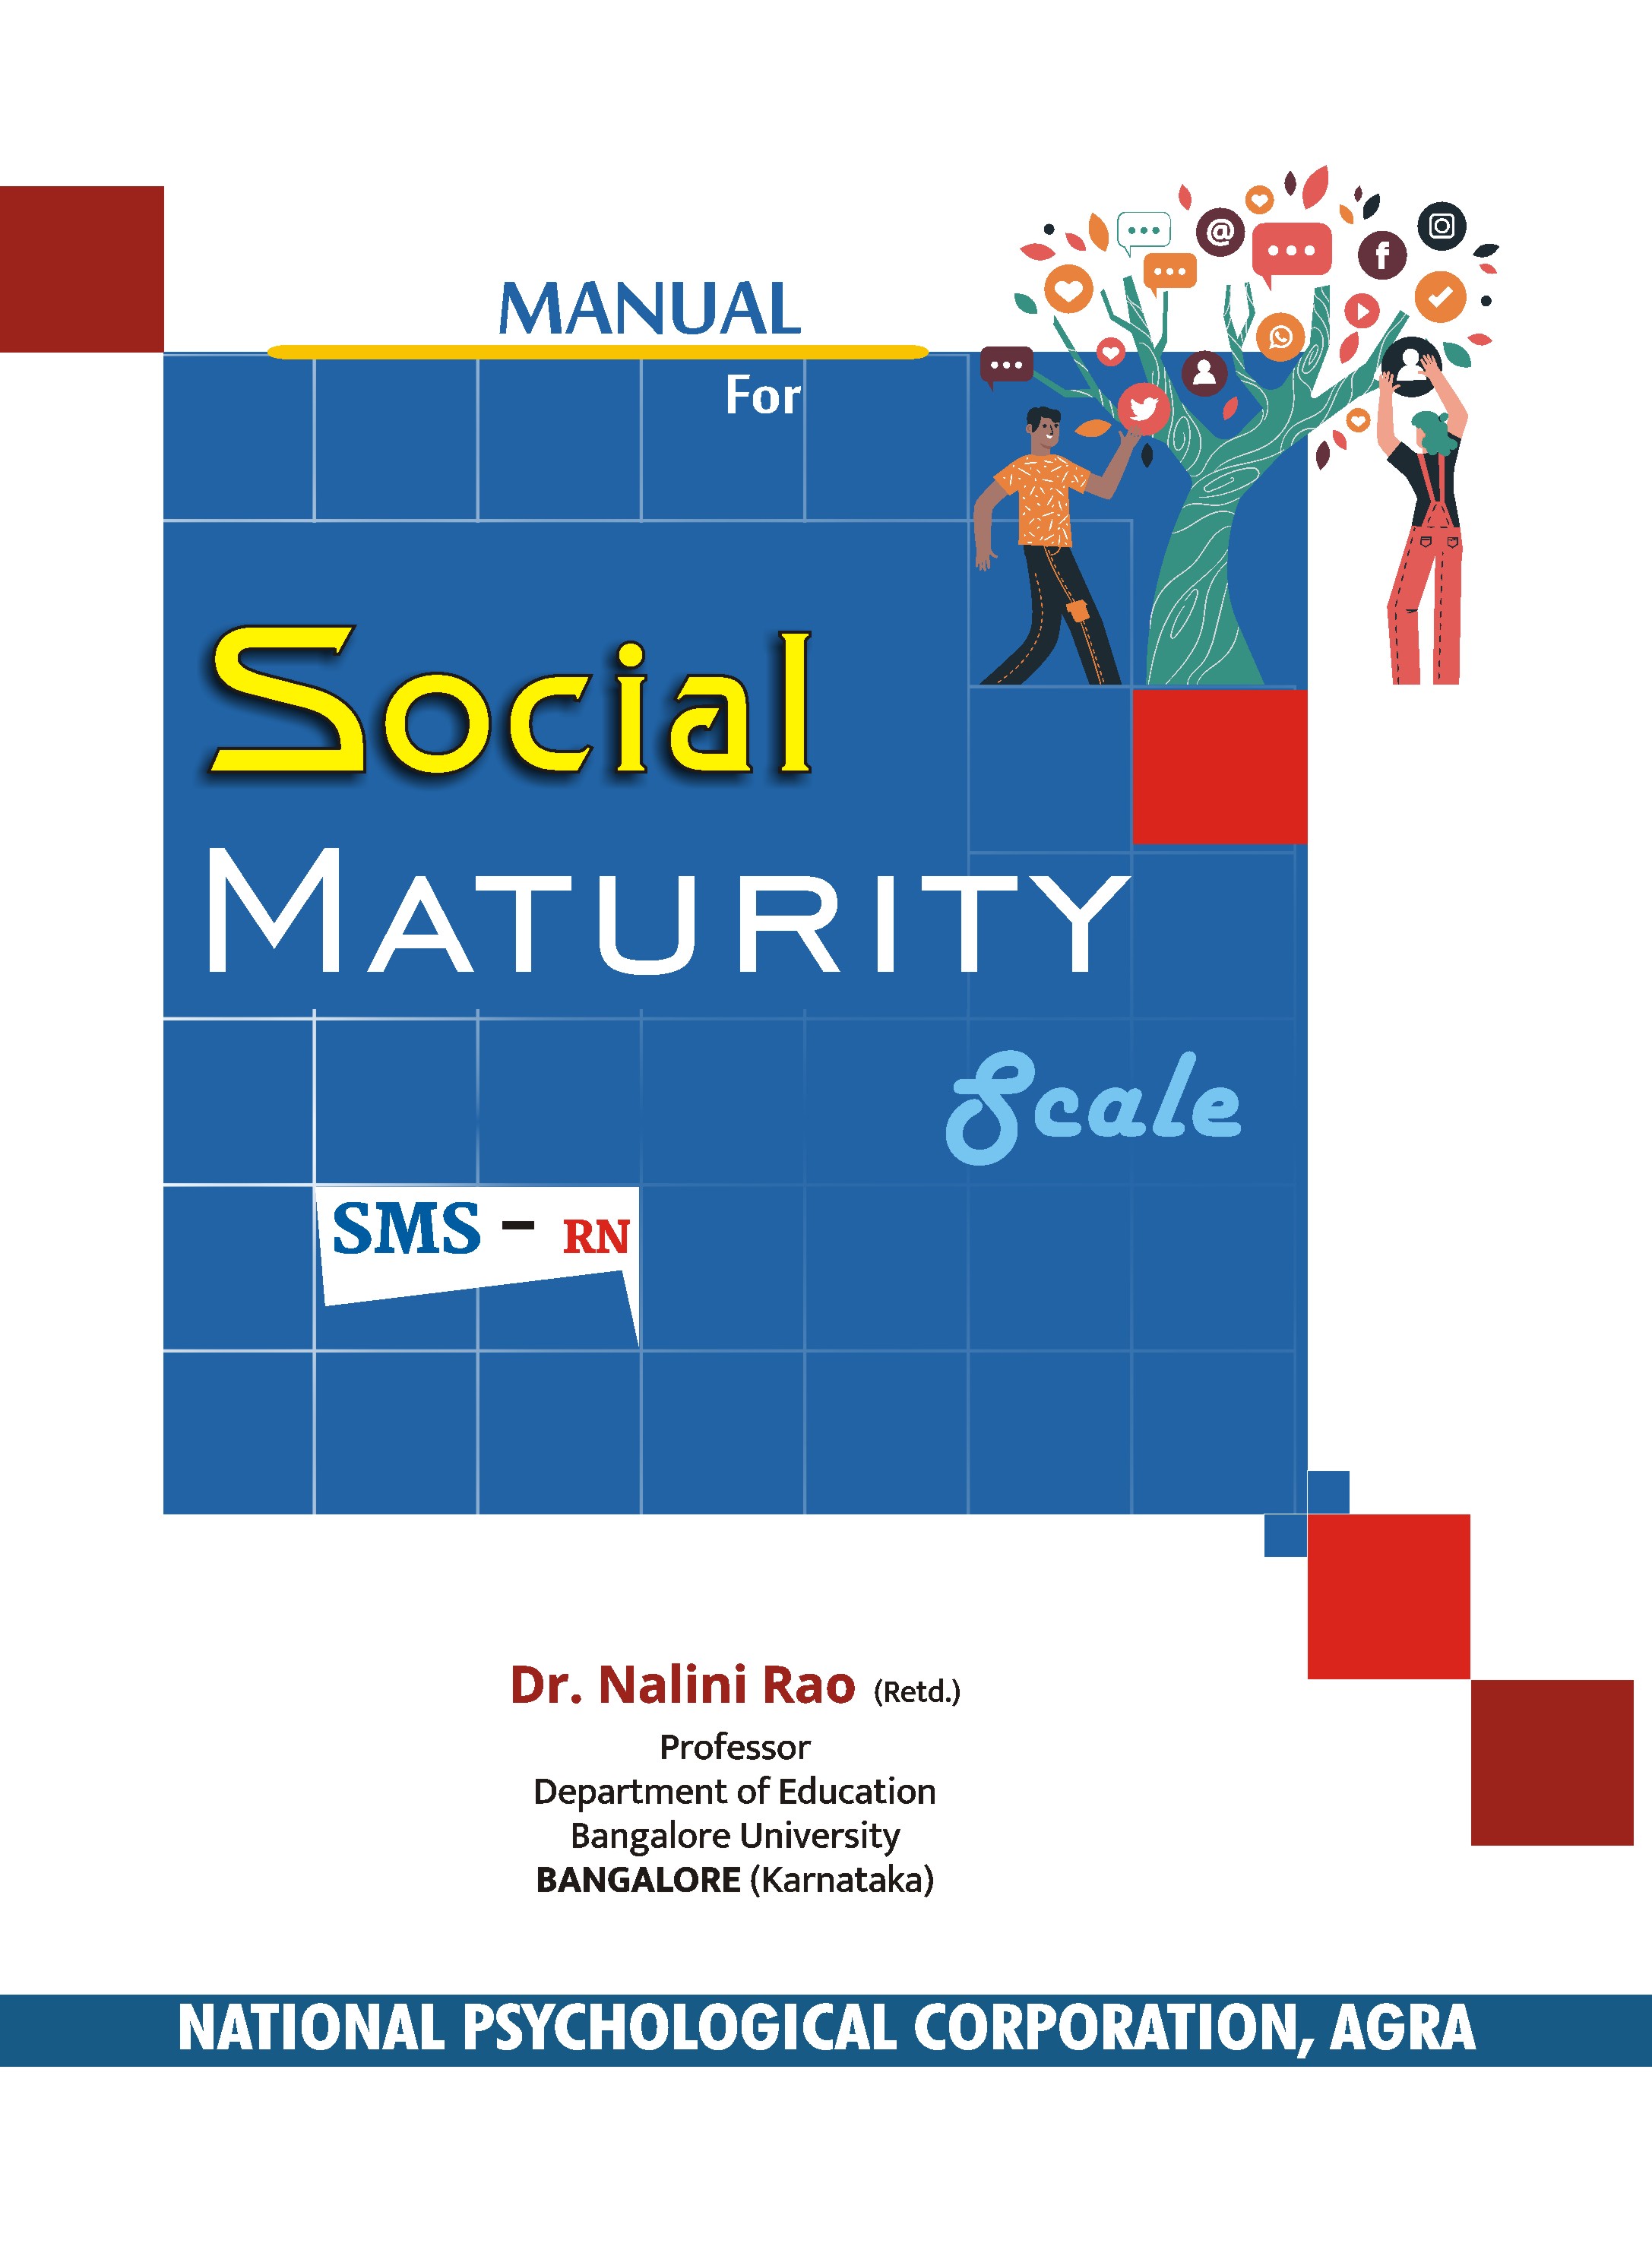 Social-Maturity-Scale